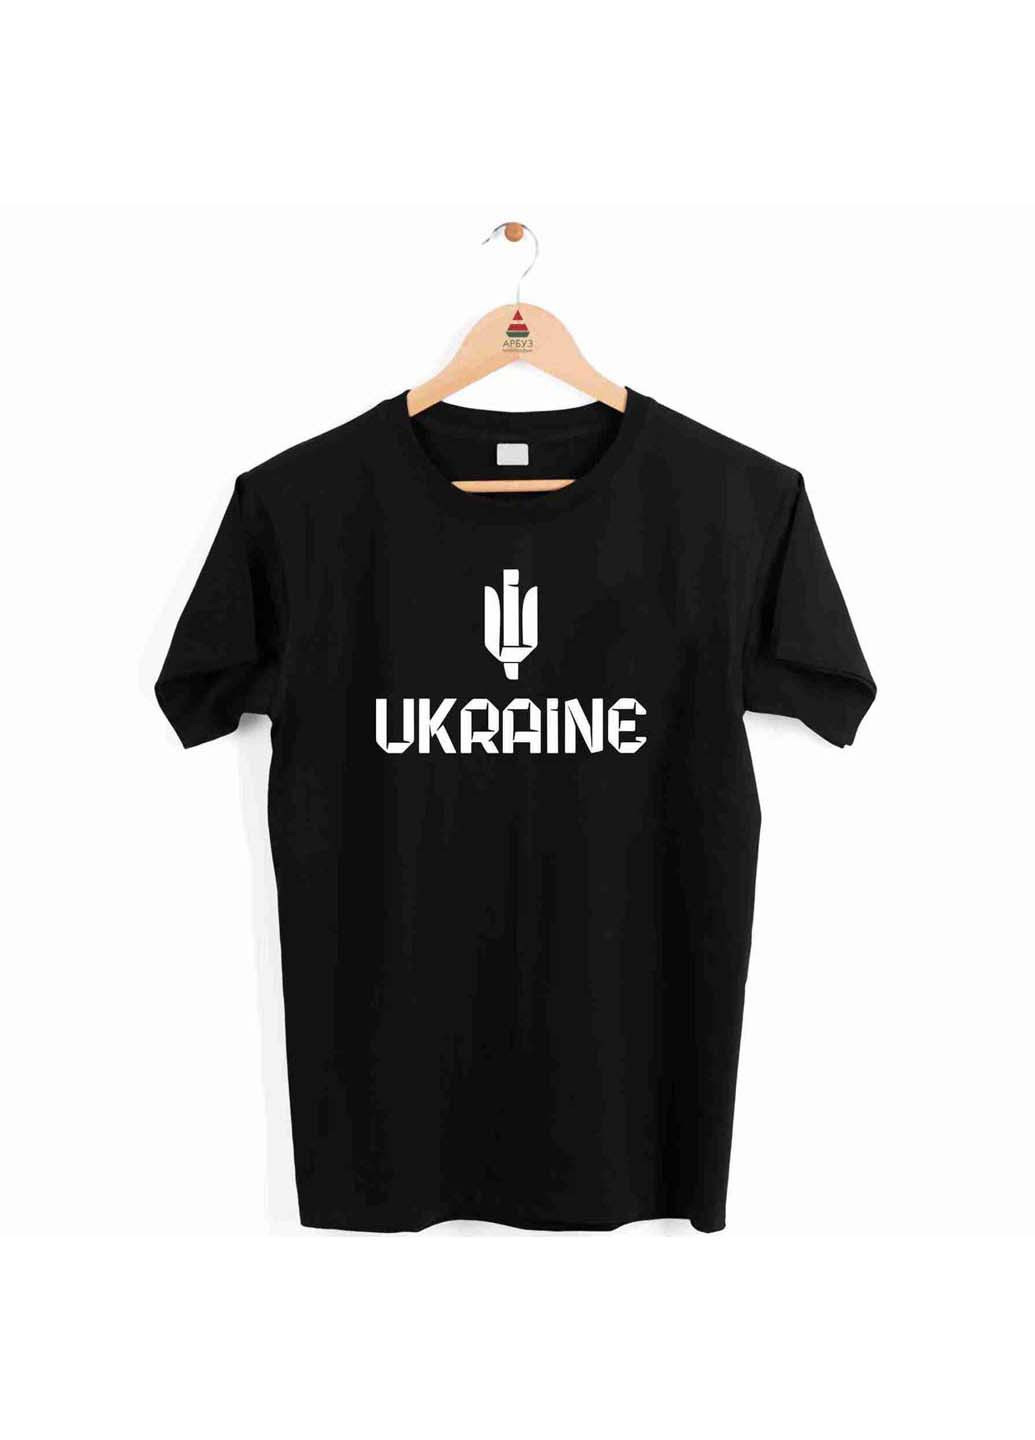 Черная футболка ua ukraine украина трезубец герб украины push it Кавун